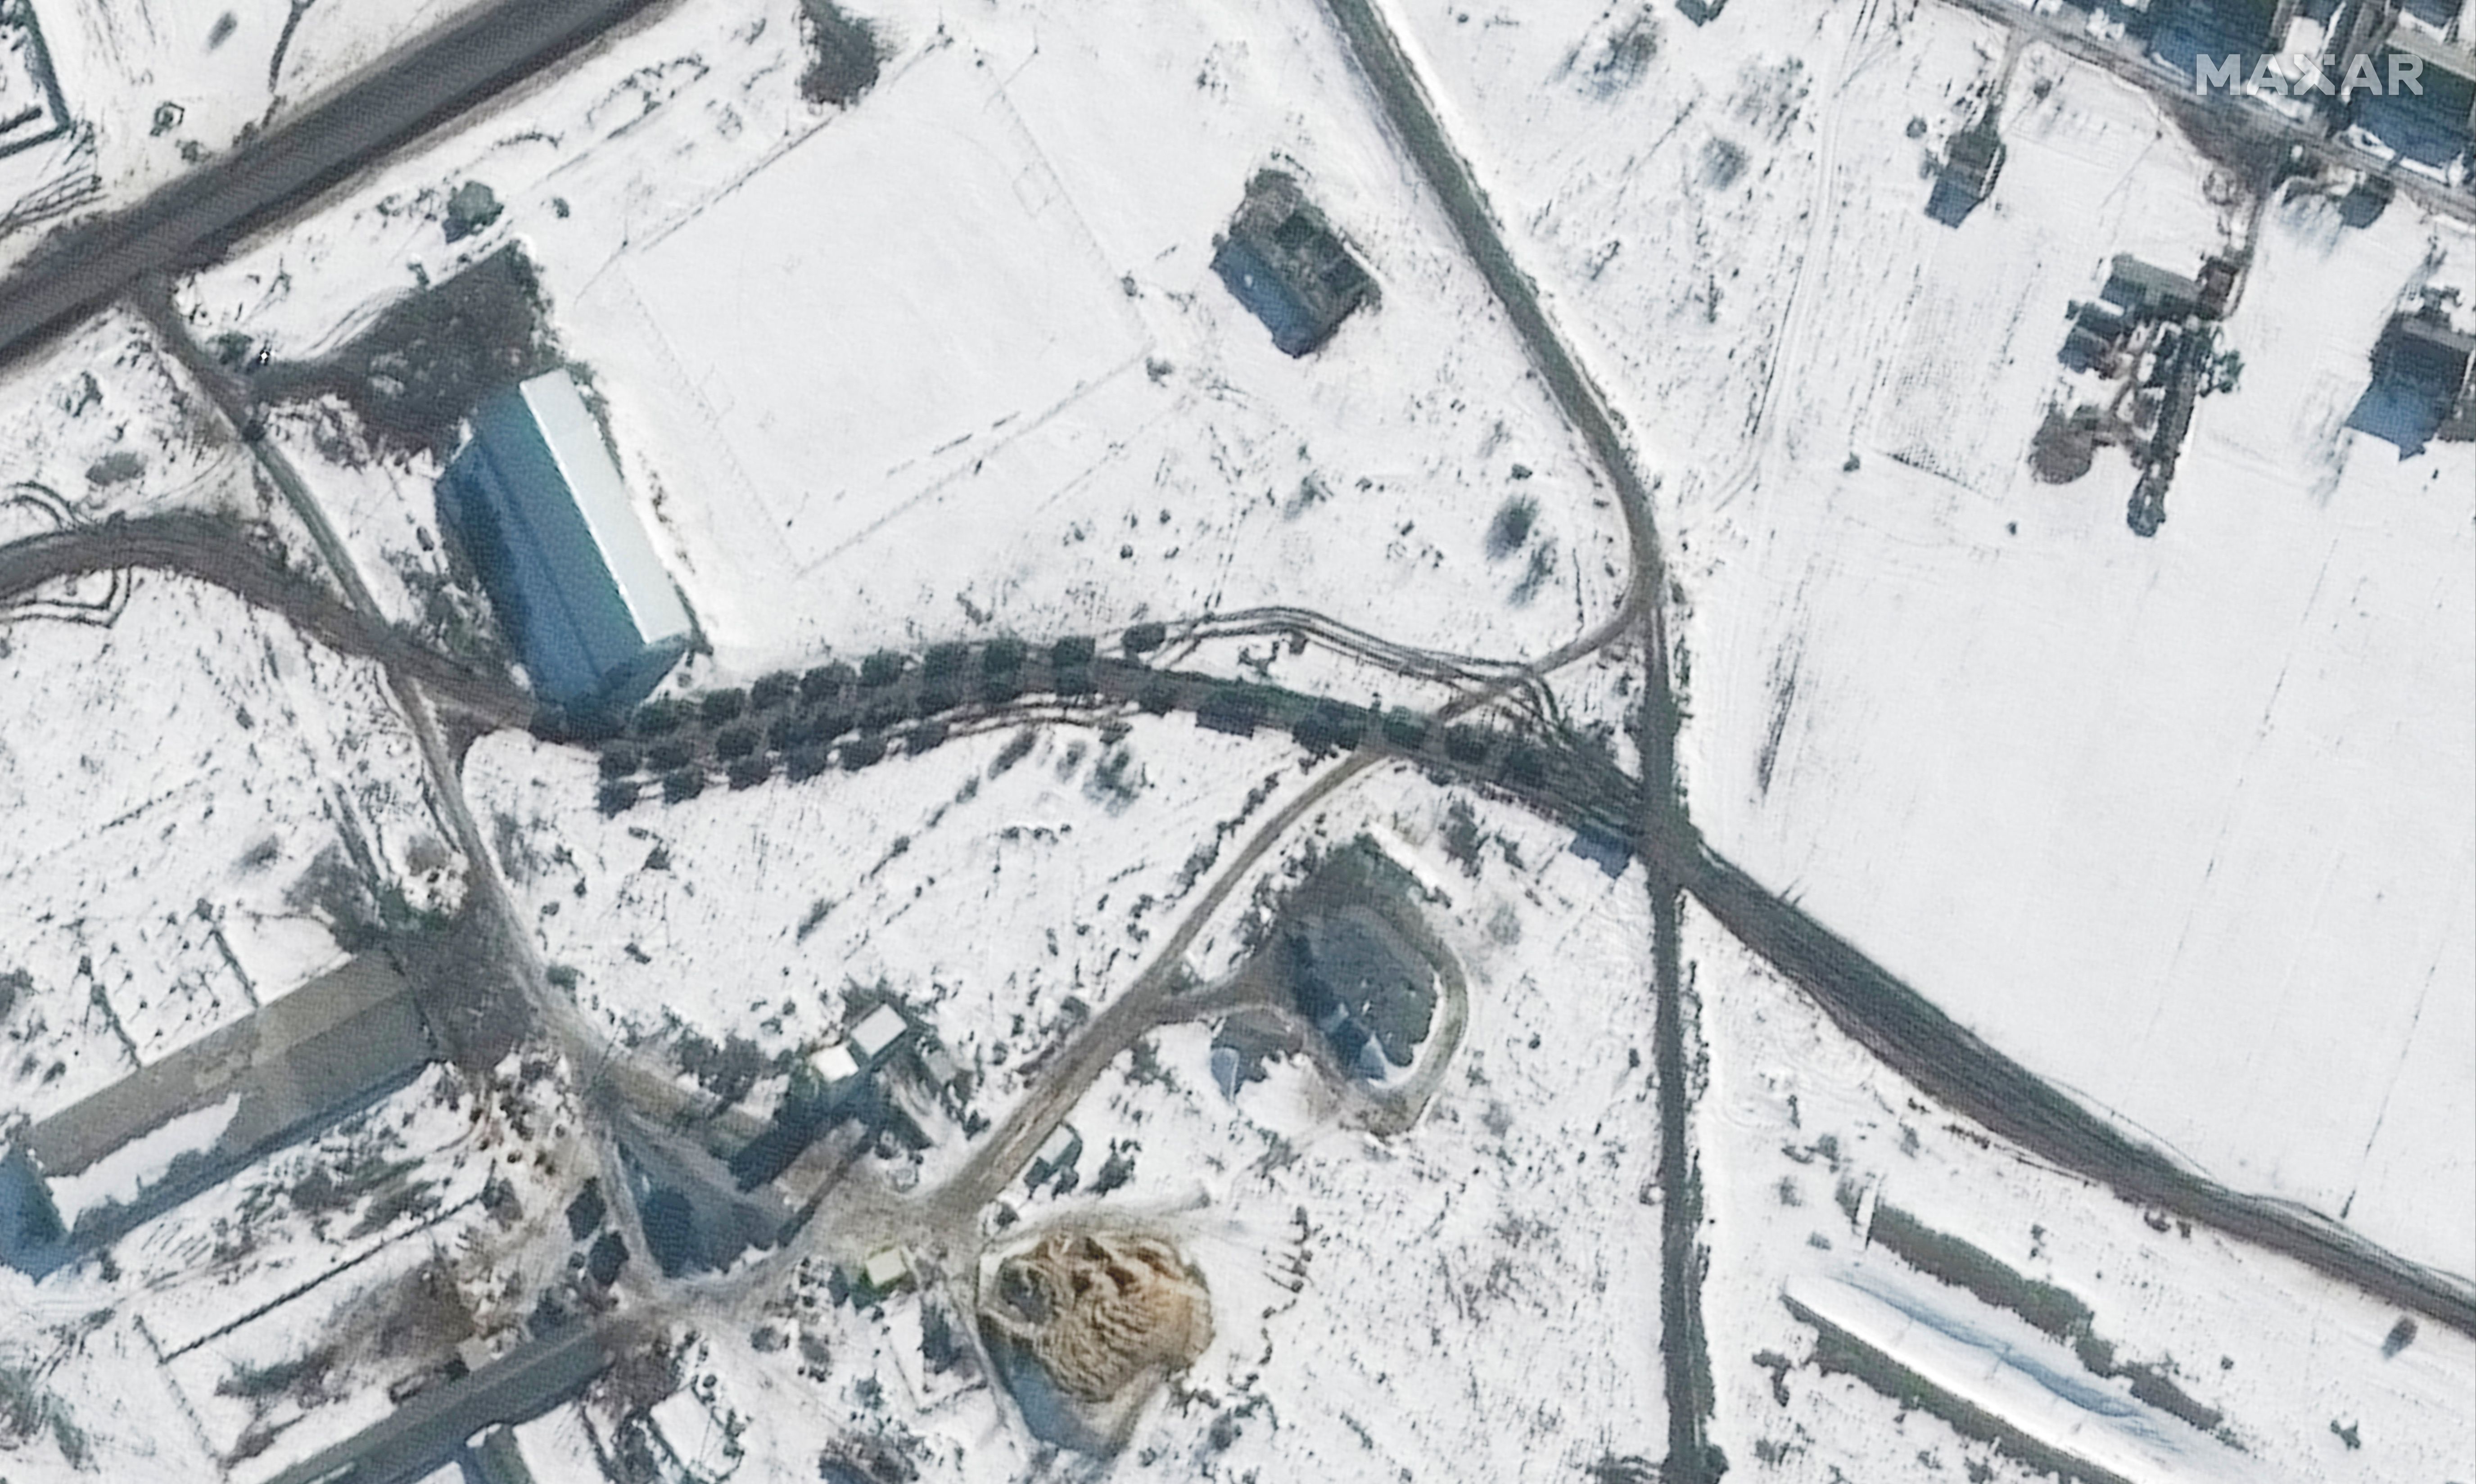 A satellite image shows a battle group deployment near Belgorod, Russia.  (Photo: Maxar Technologies/Handout via REUTERS)